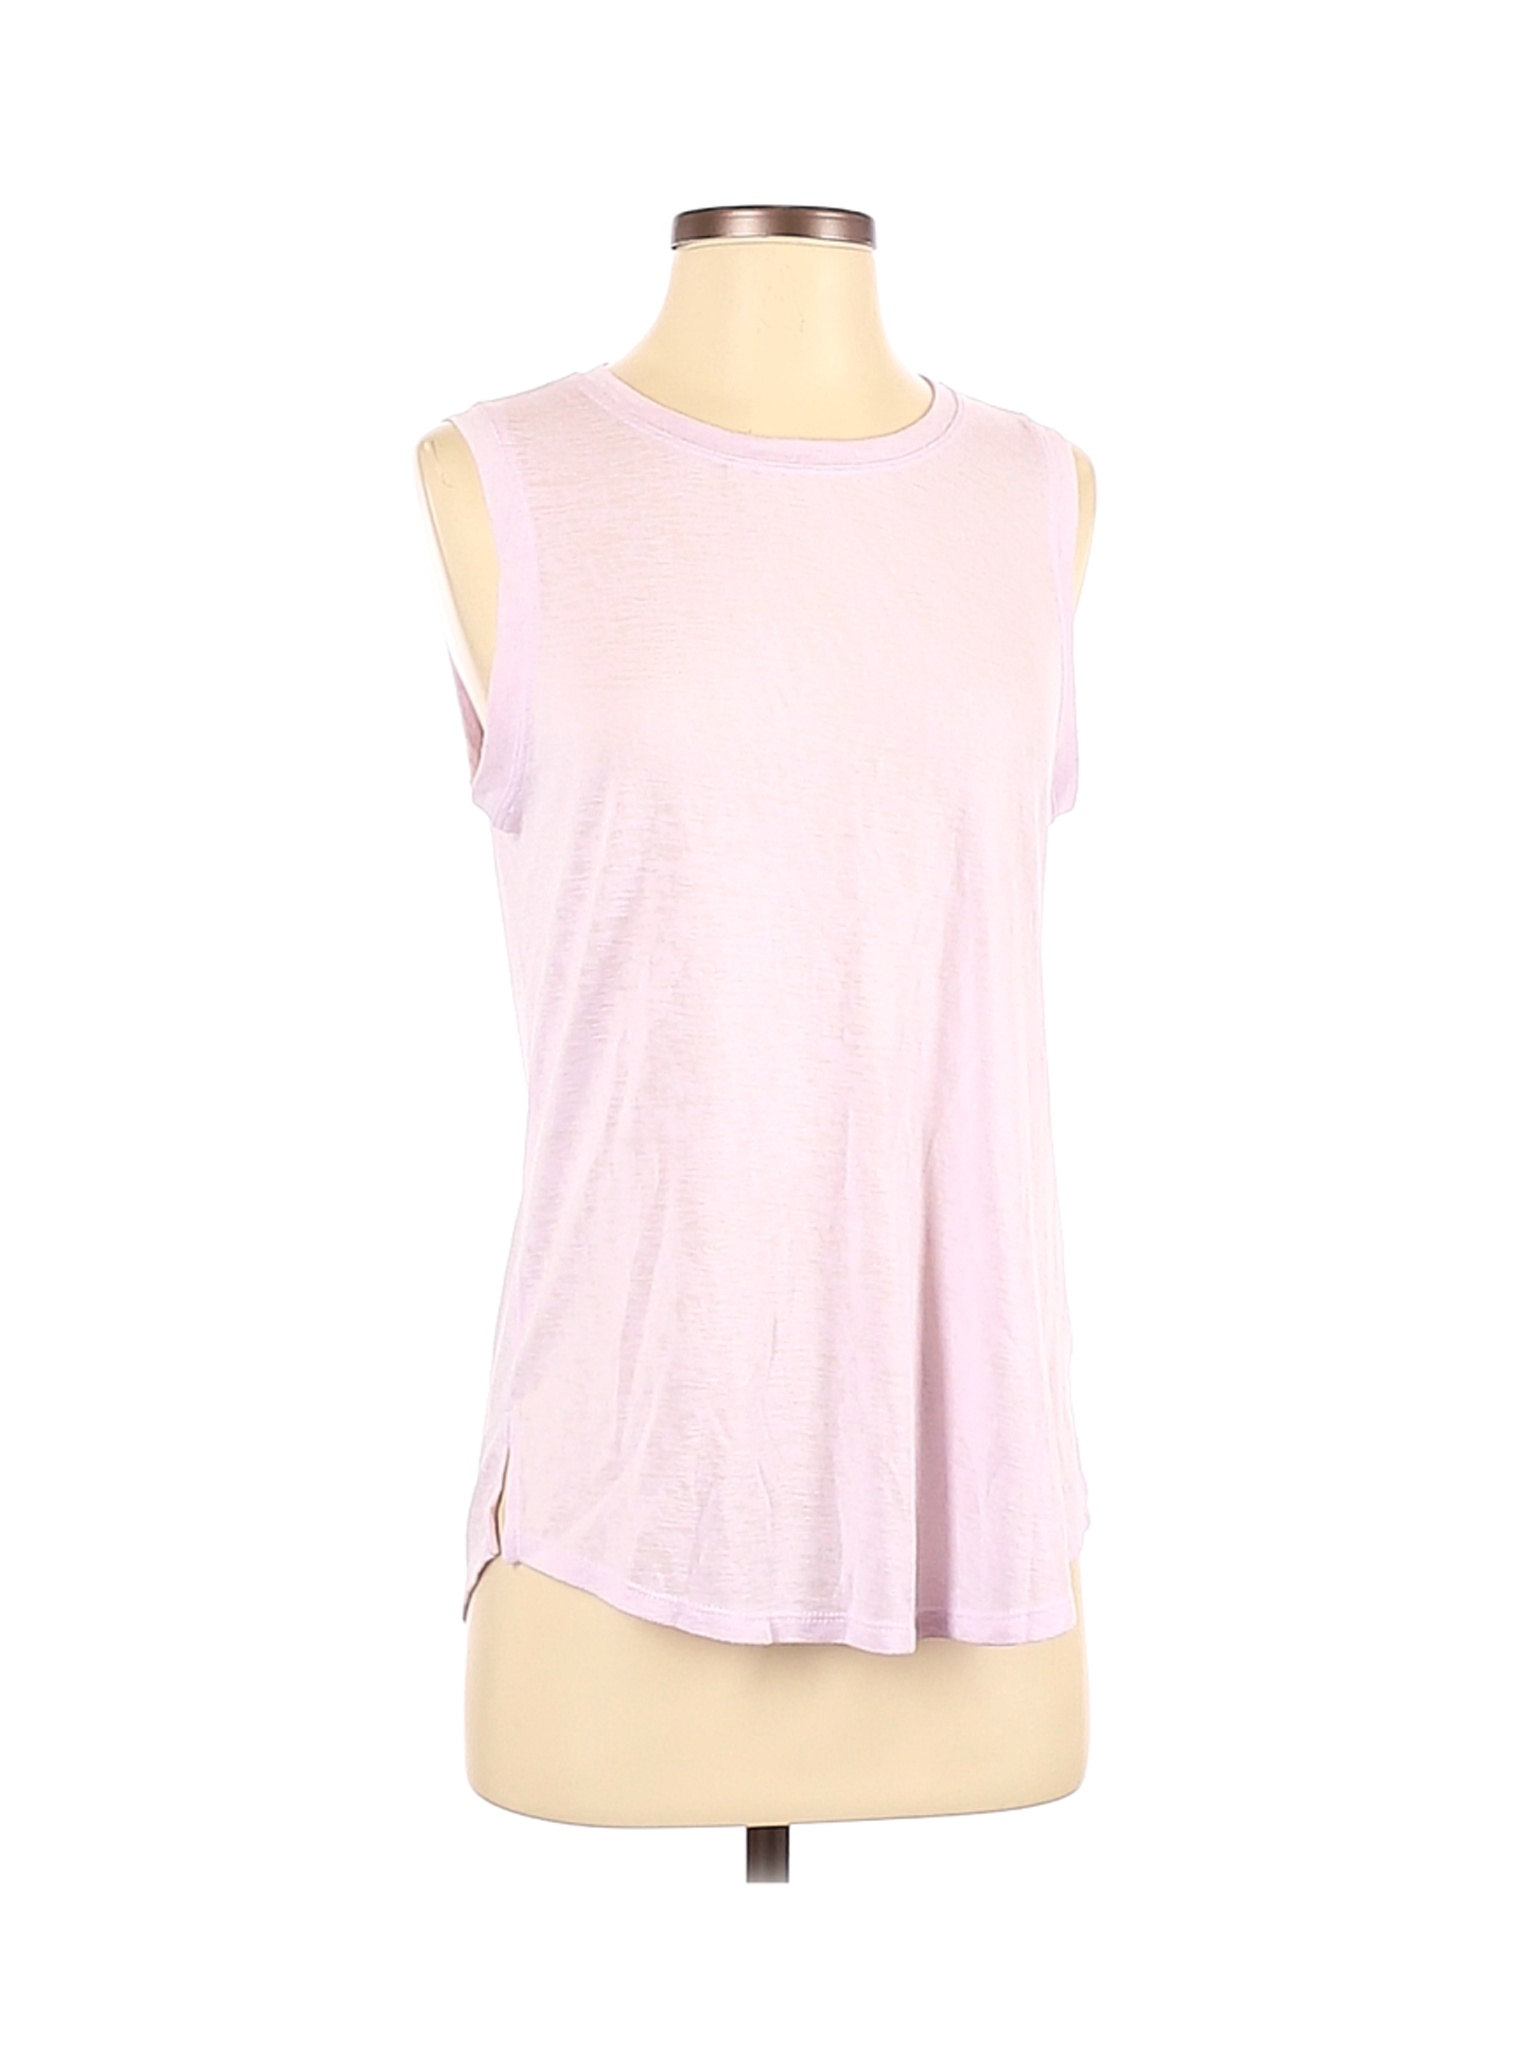 Athleta Women Pink Active T-Shirt S | eBay